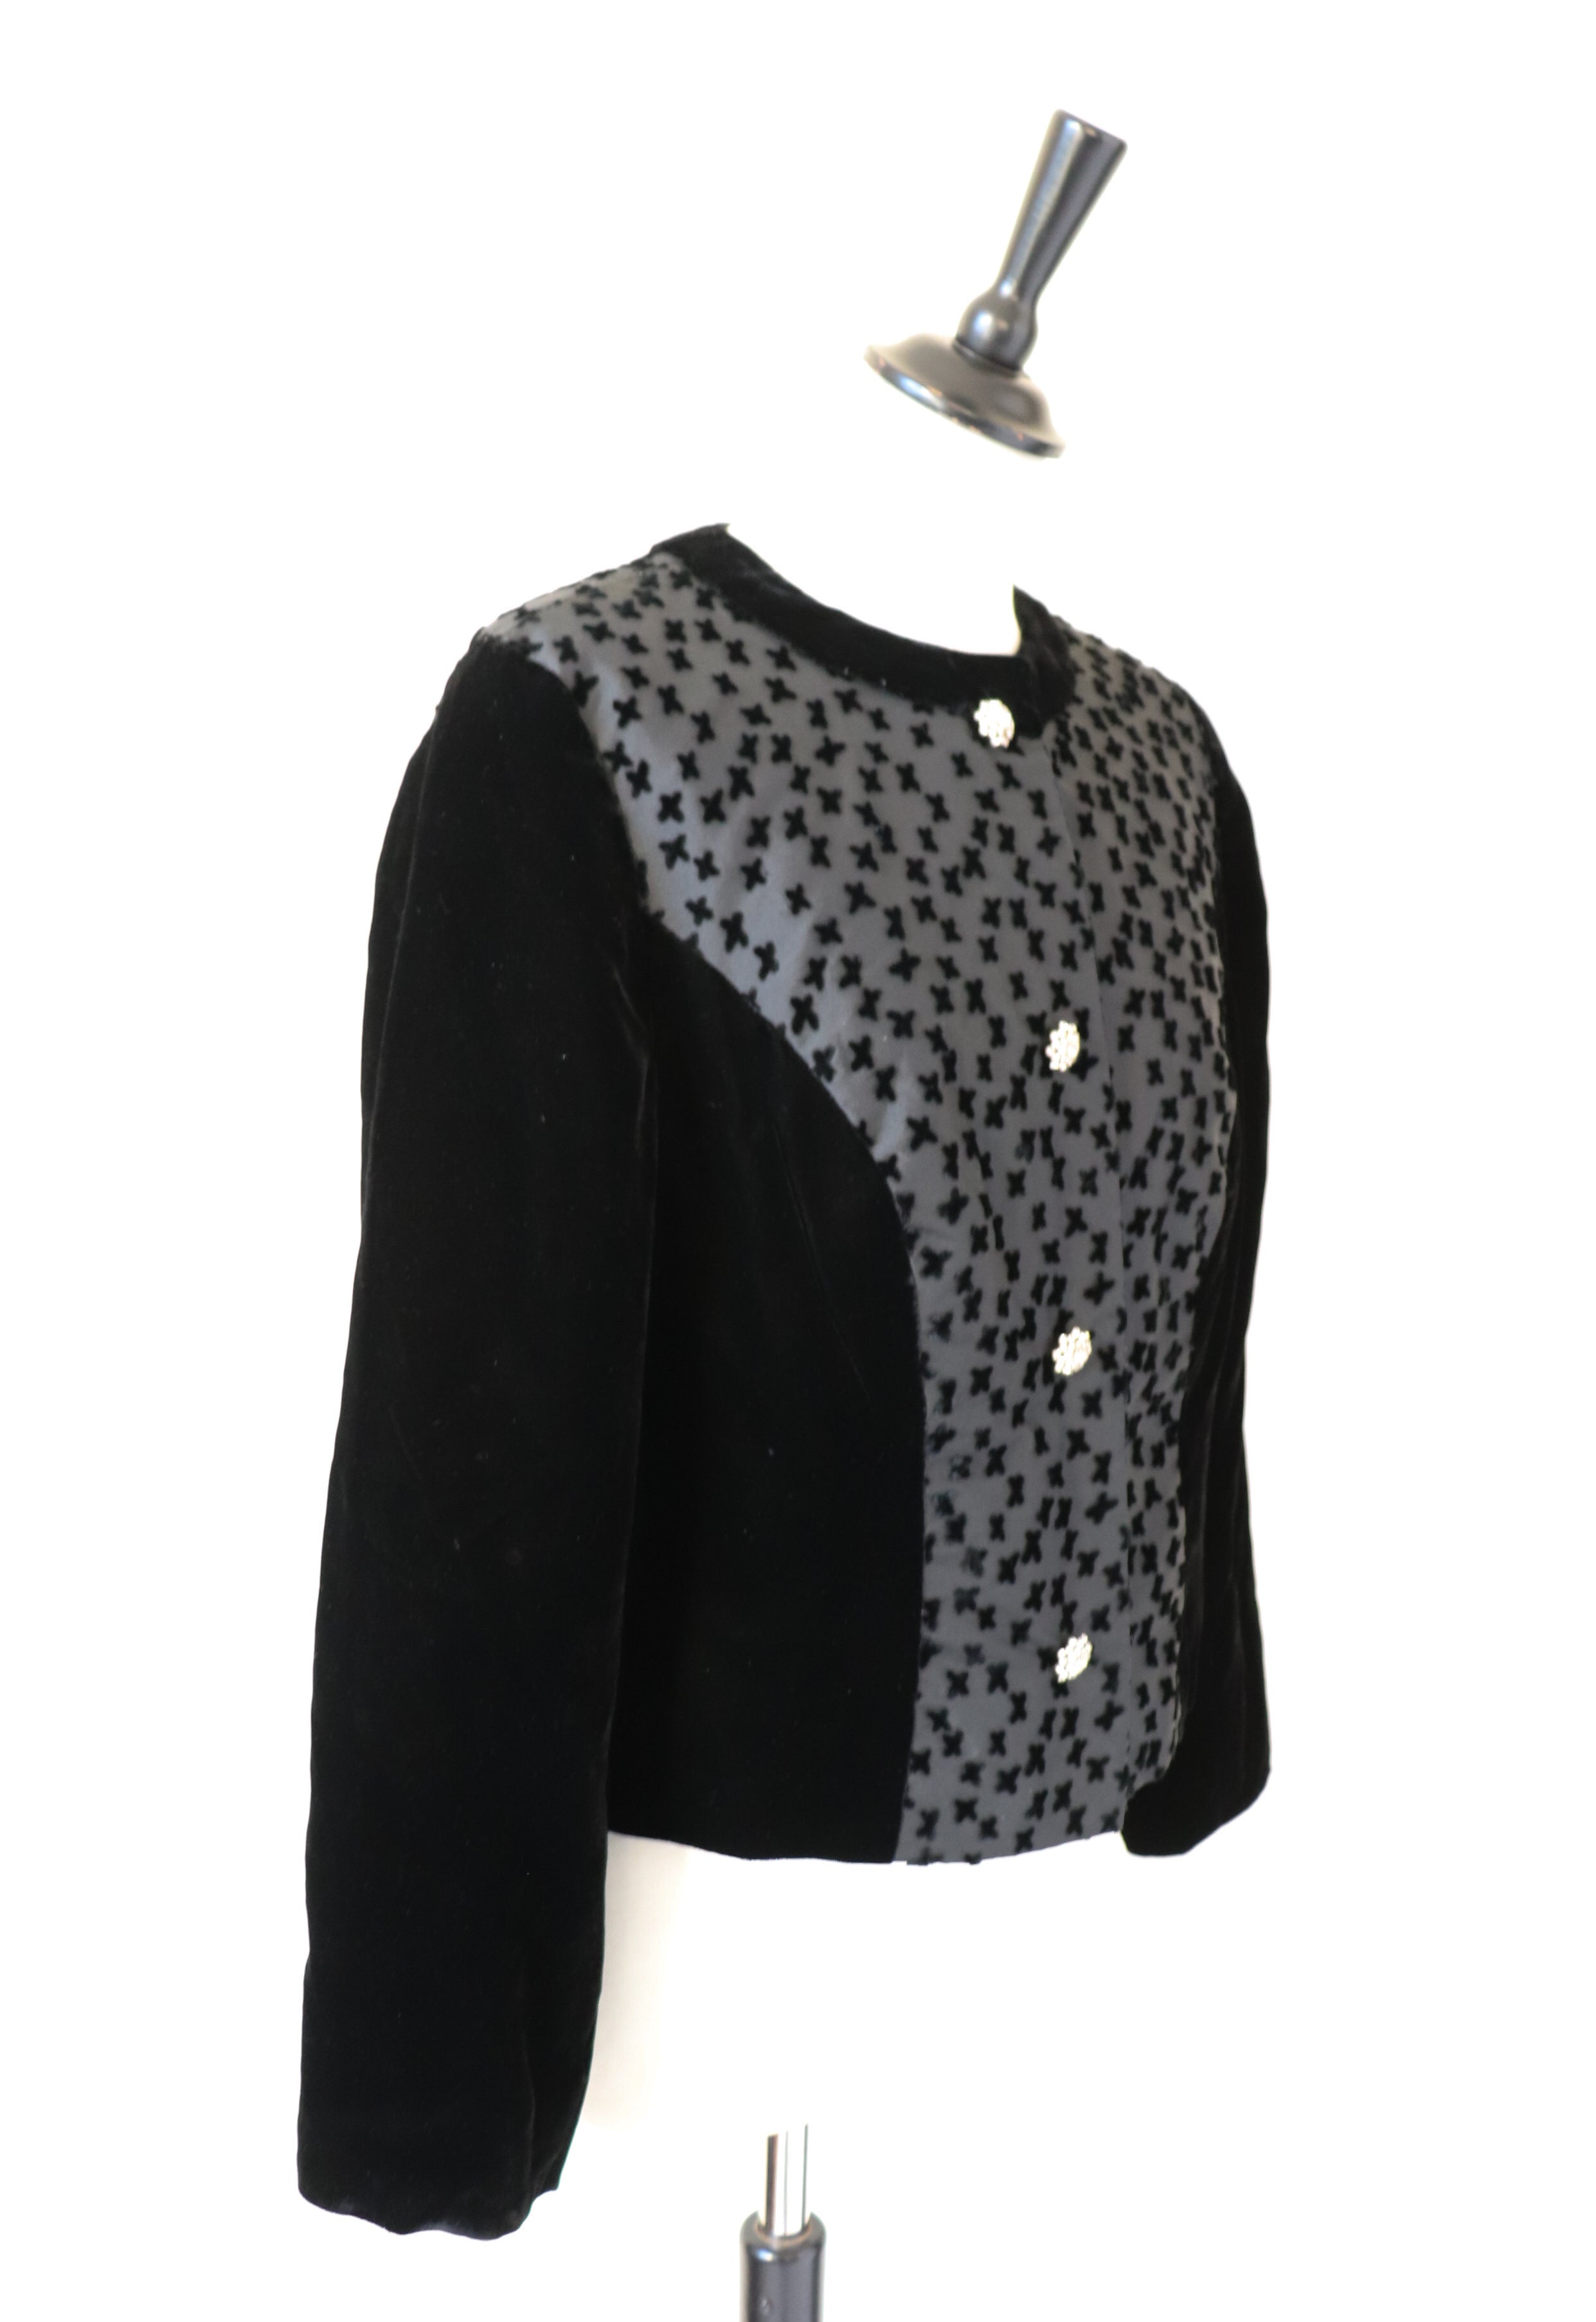 Black Velvet Collarless Evening Jacket  - Vintage - S / M - UK 10 / 12